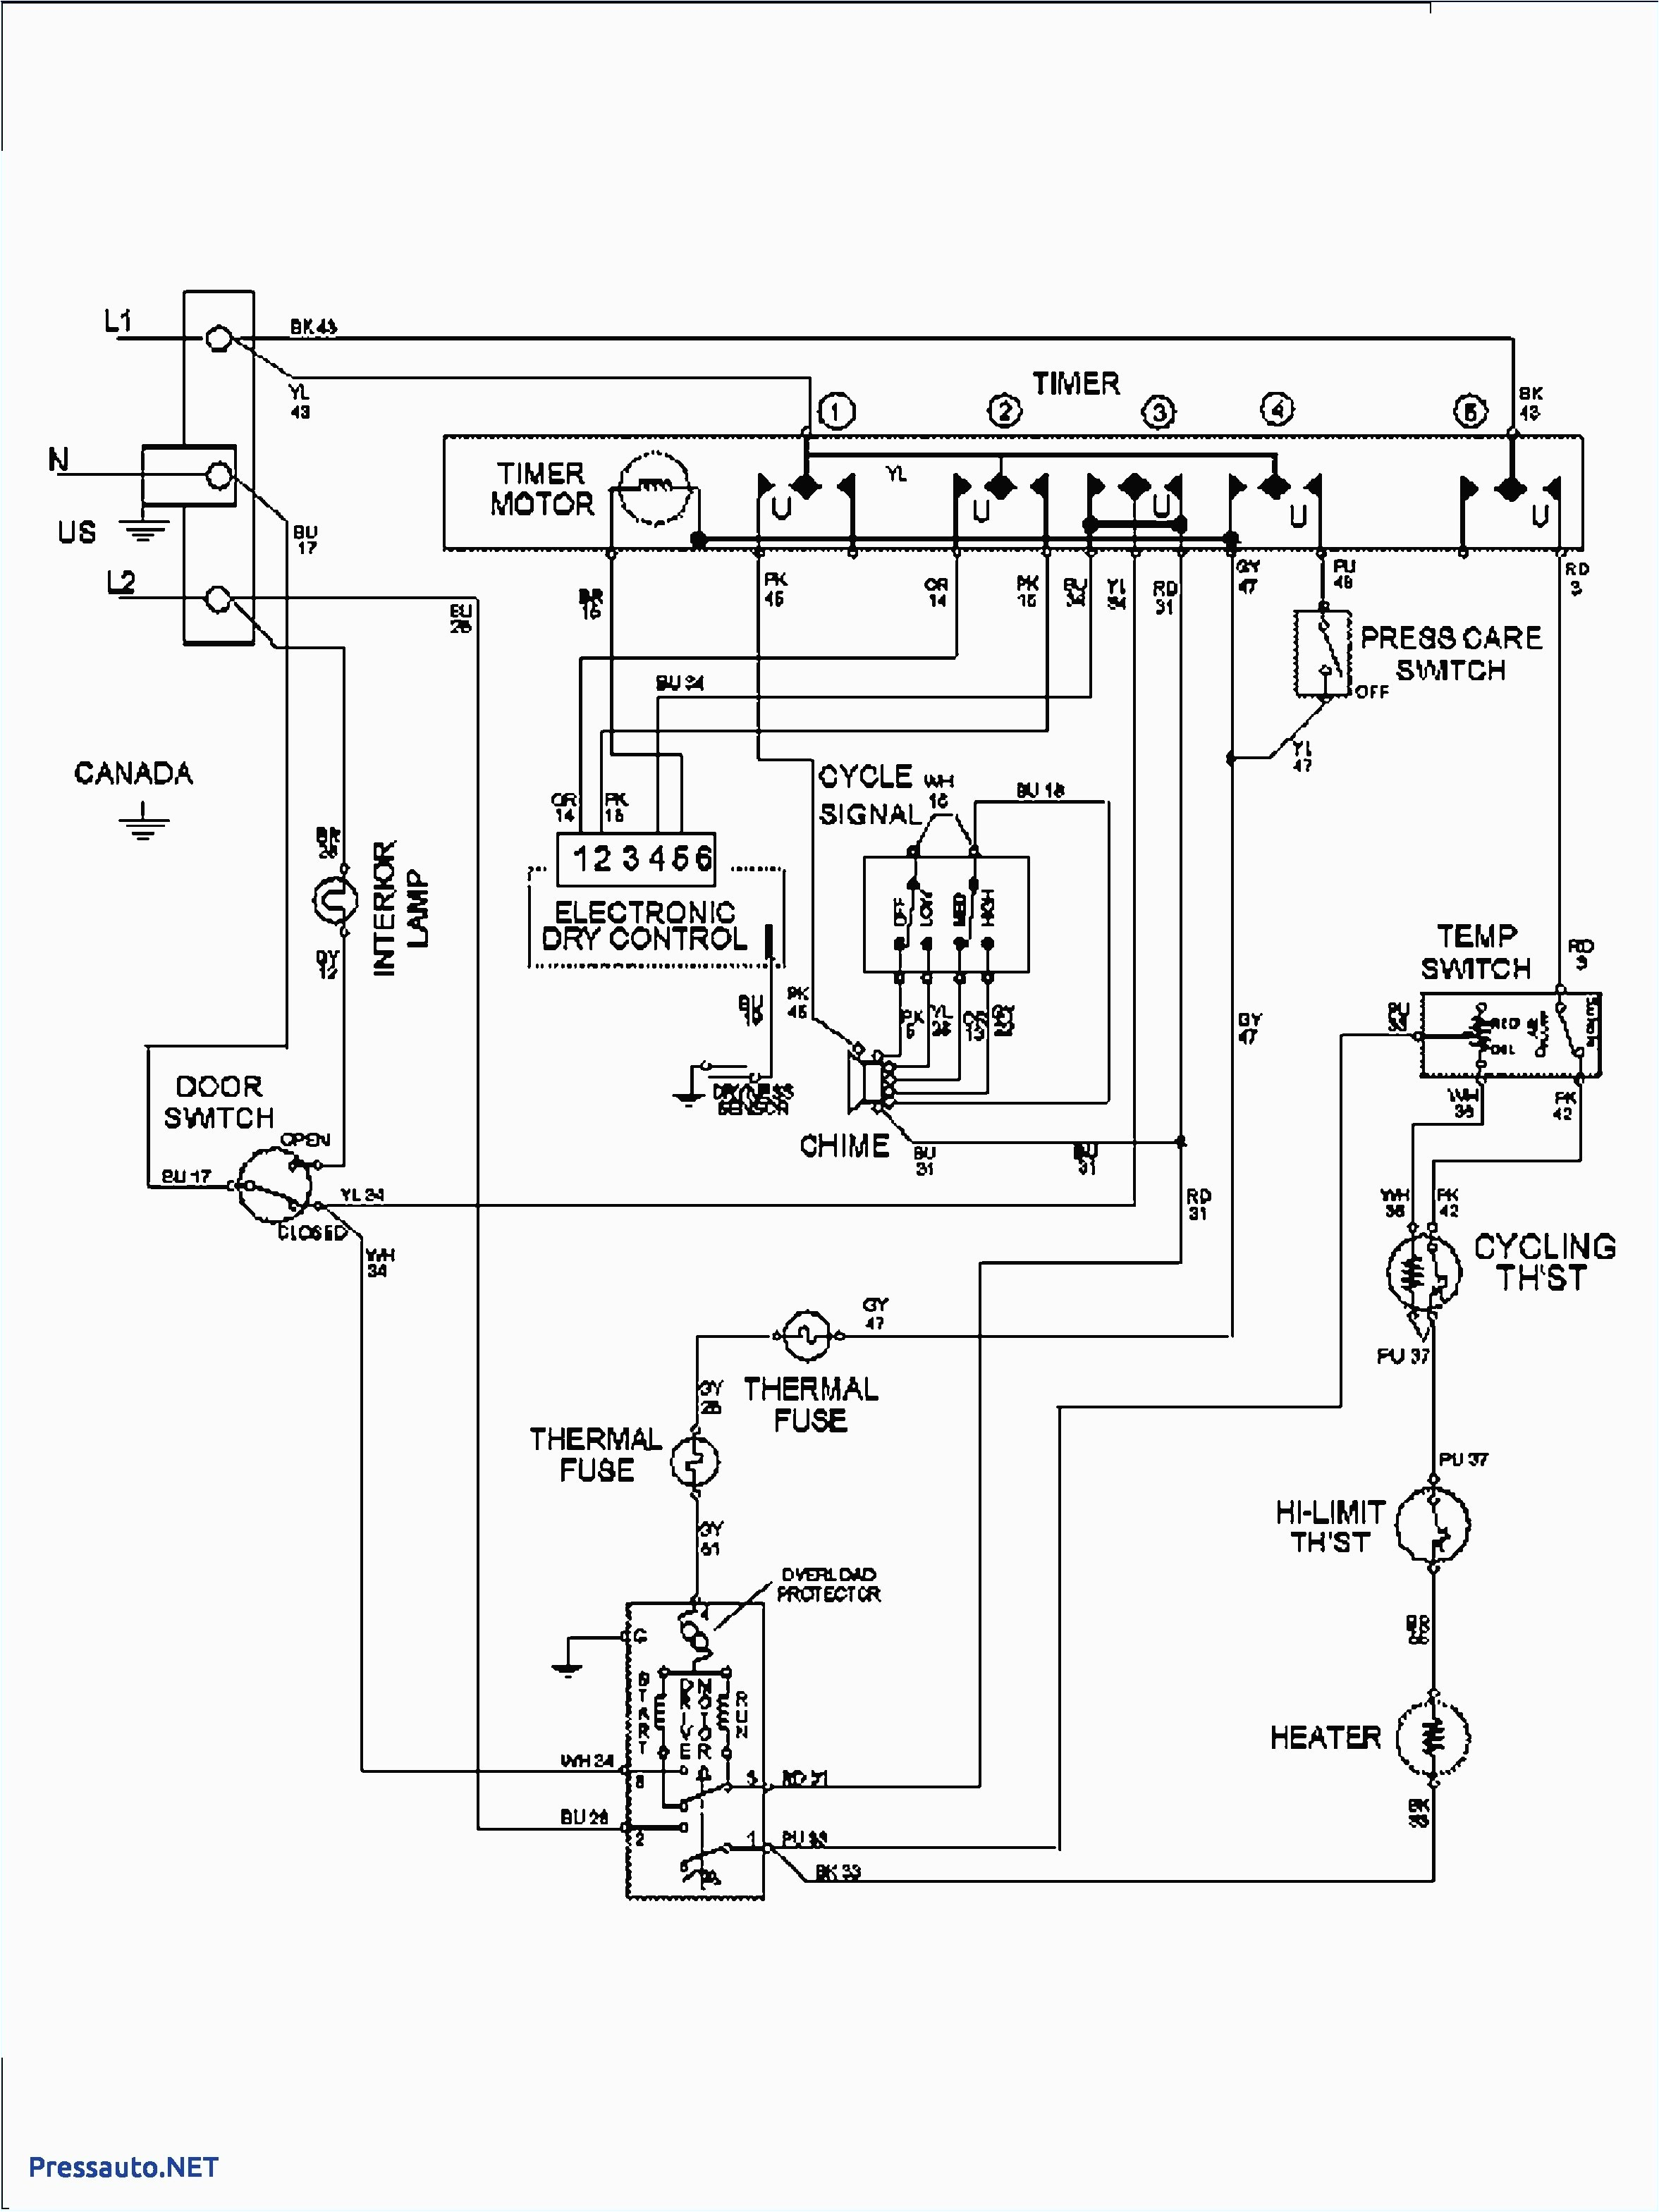 whirlpool dryer wiring schematic wiring diagram appliance dryer inspirationa amana dryer wiring diagram fresh for whirlpool unbelievable chromatex 5n jpg